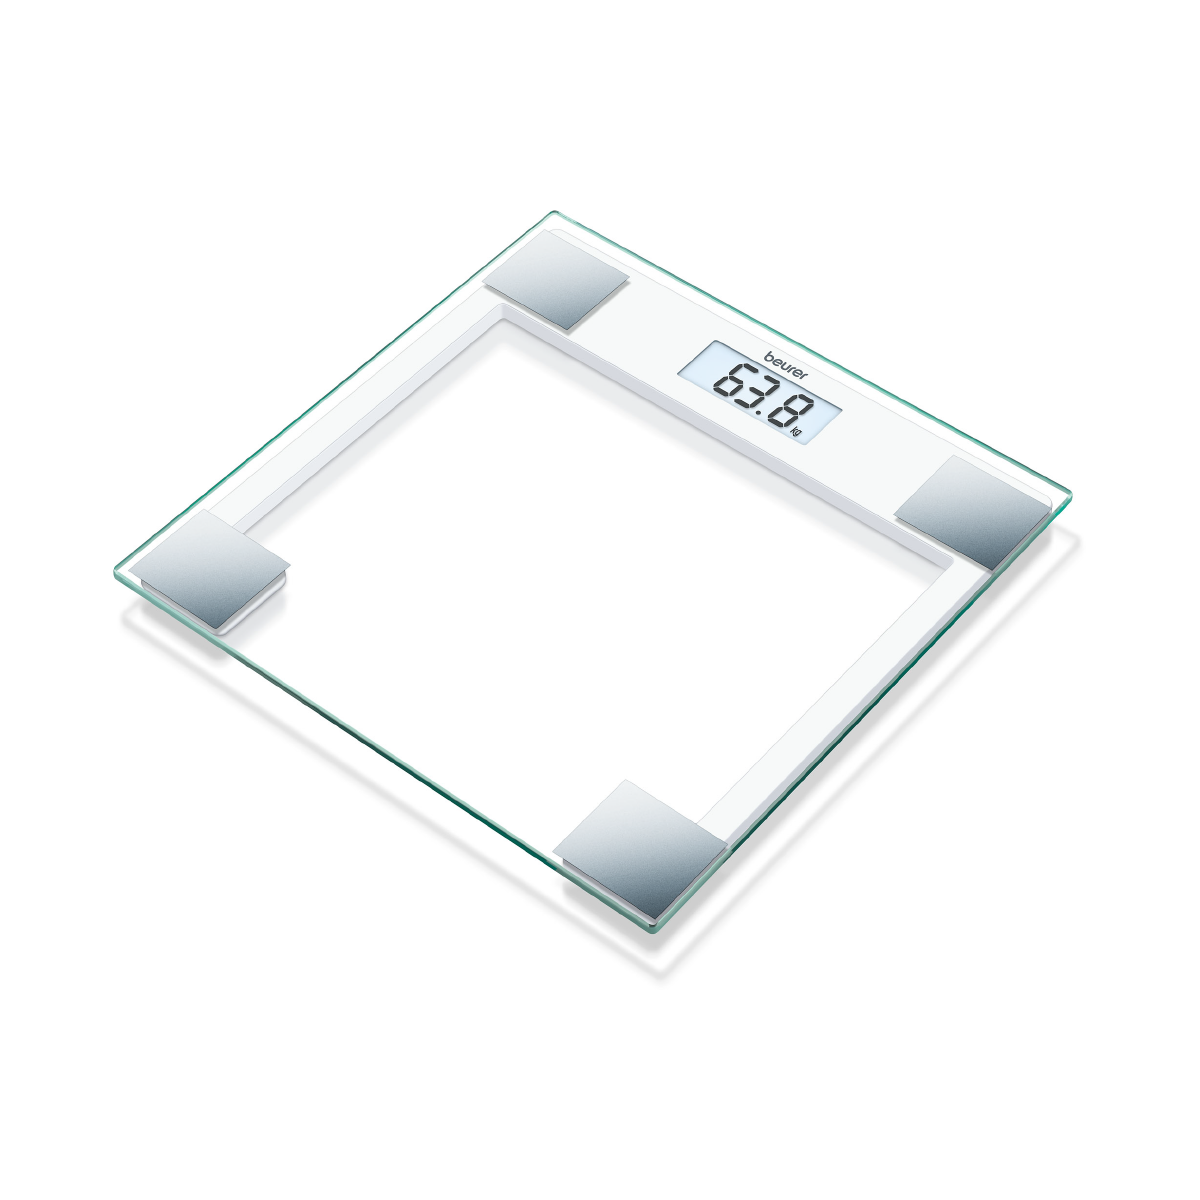 Báscula de Diagnóstico con Superficie de Vidrio, Pantalla LCD con Autoencendido / GS14 Marca Beurer®